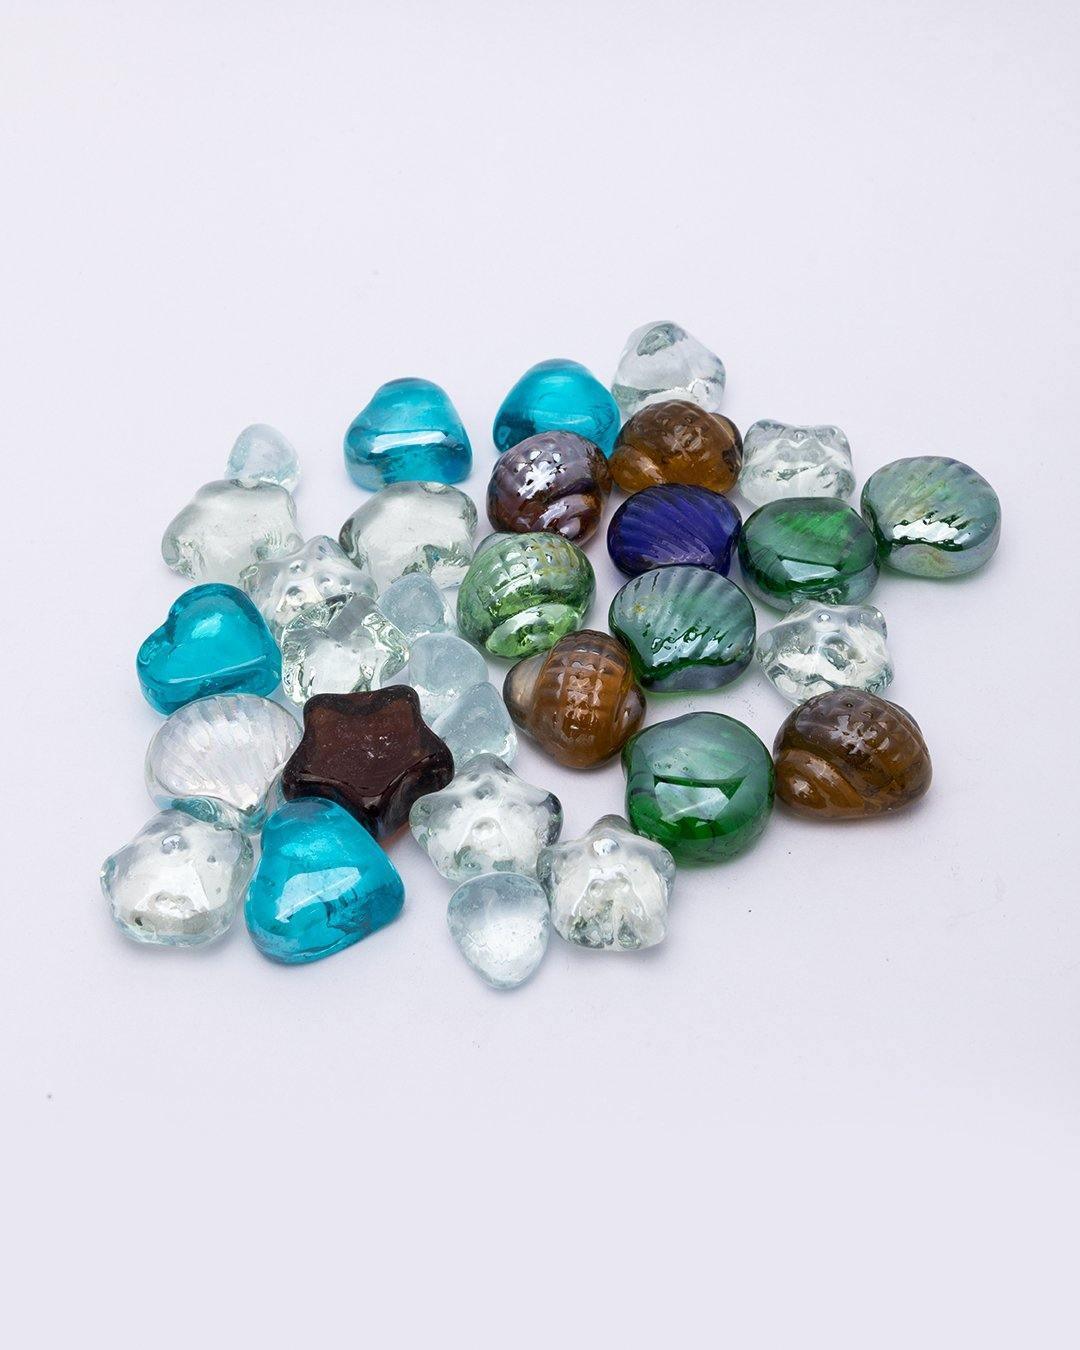 Decorative Pebbles, for Decoration, Multicolour, Stone - MARKET 99